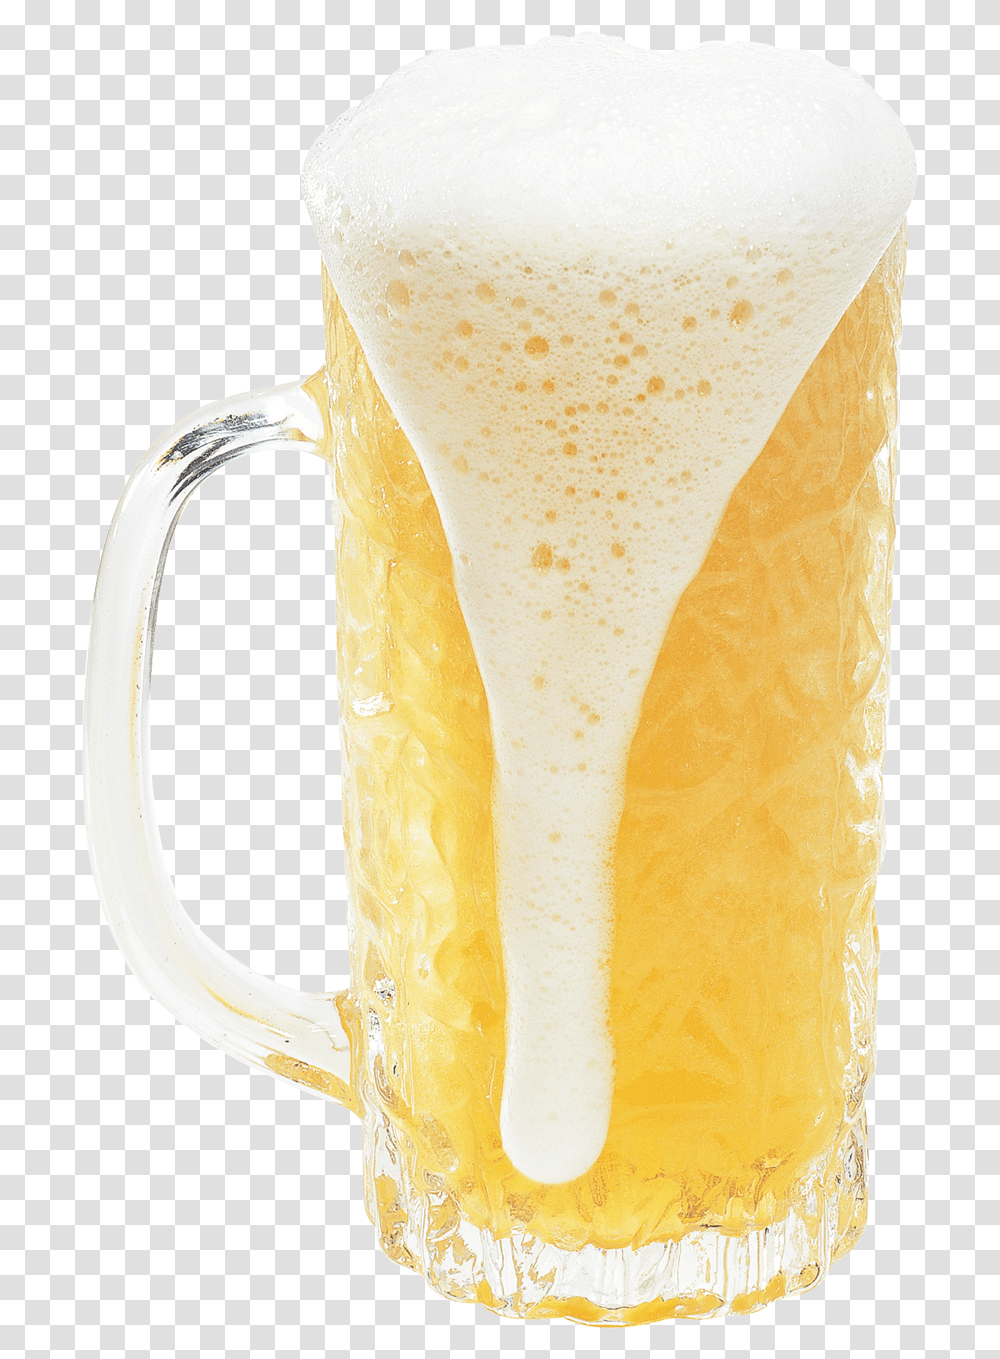 Beer Glass Image Beer Glass, Alcohol, Beverage, Drink, Stein Transparent Png